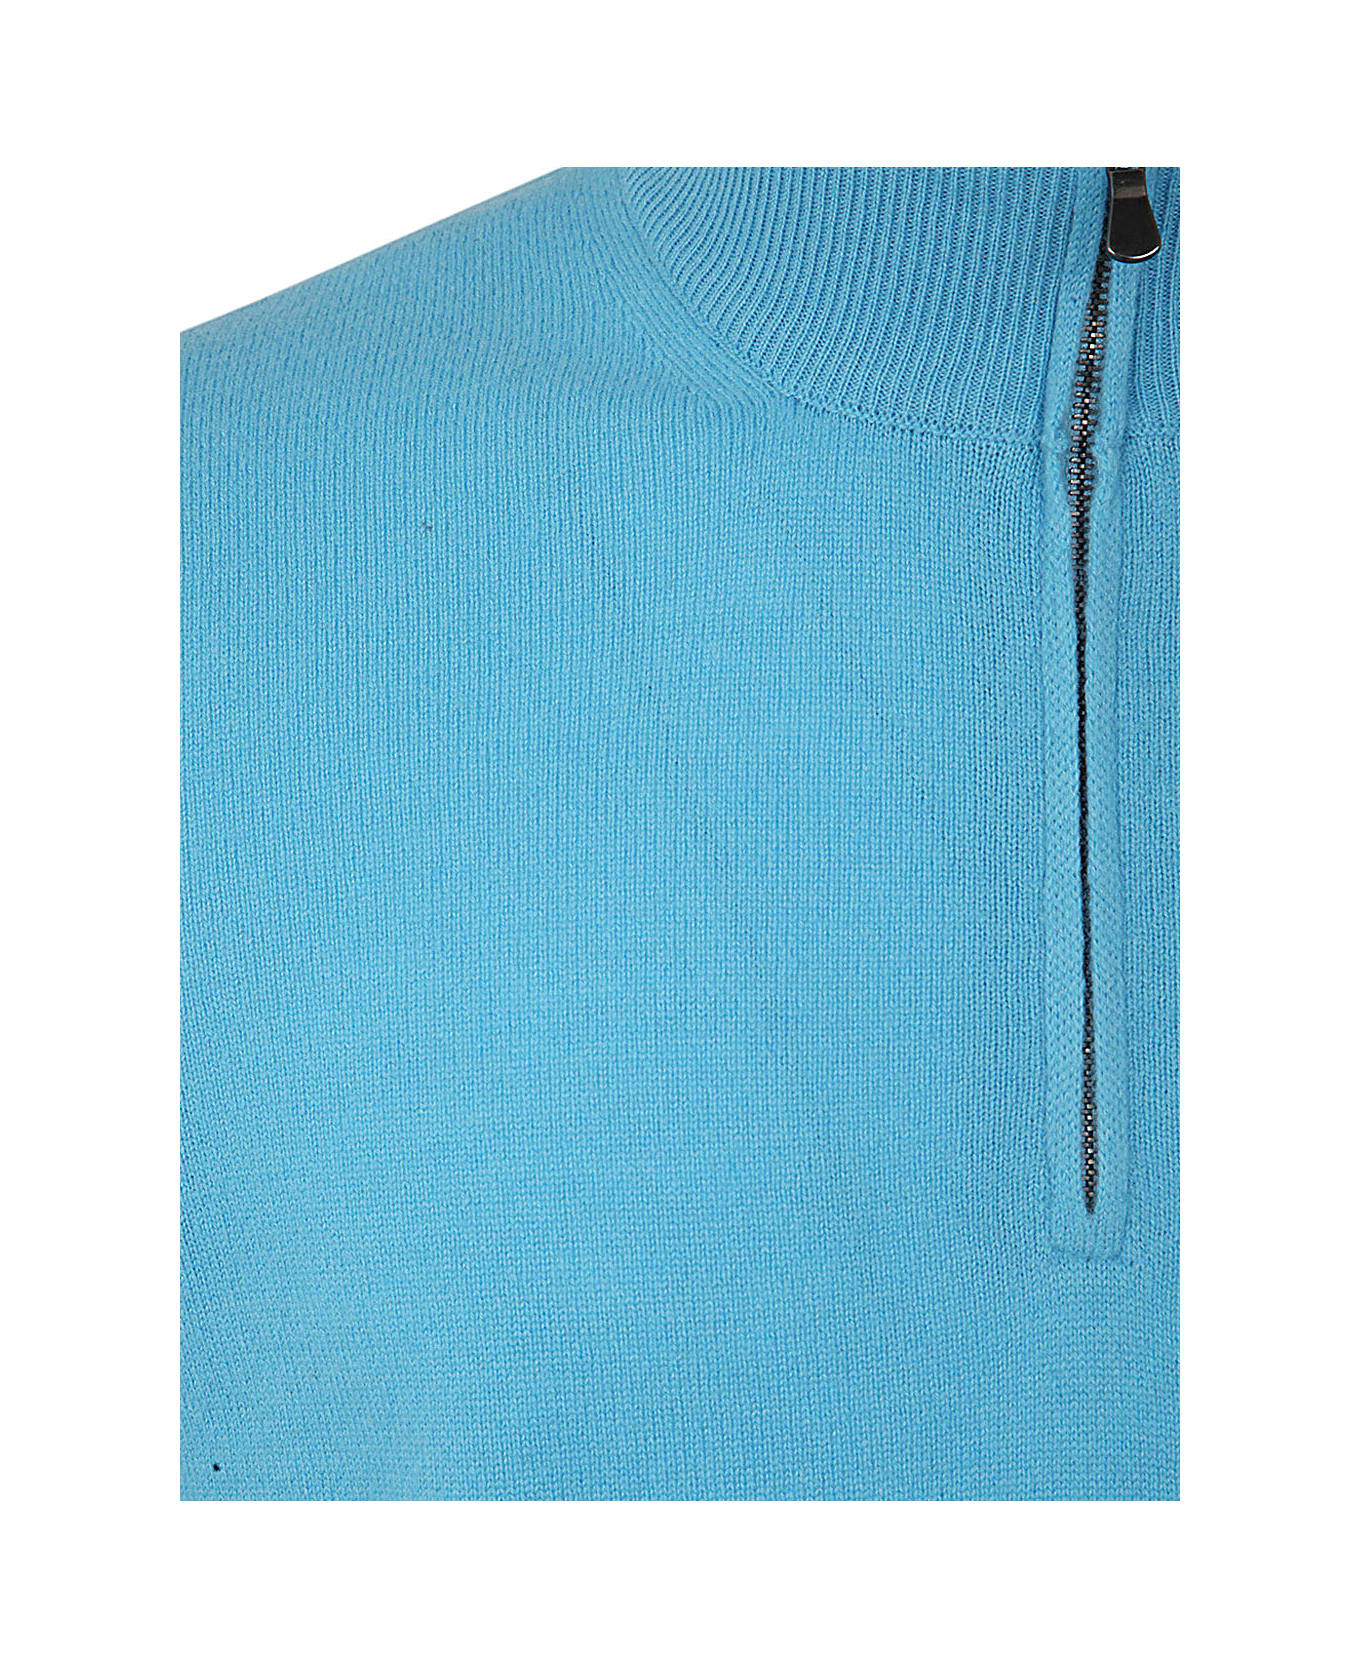 Filippo De Laurentiis Wool Cashmere Long Sleeves Half Zipped Sweater - Light Blue